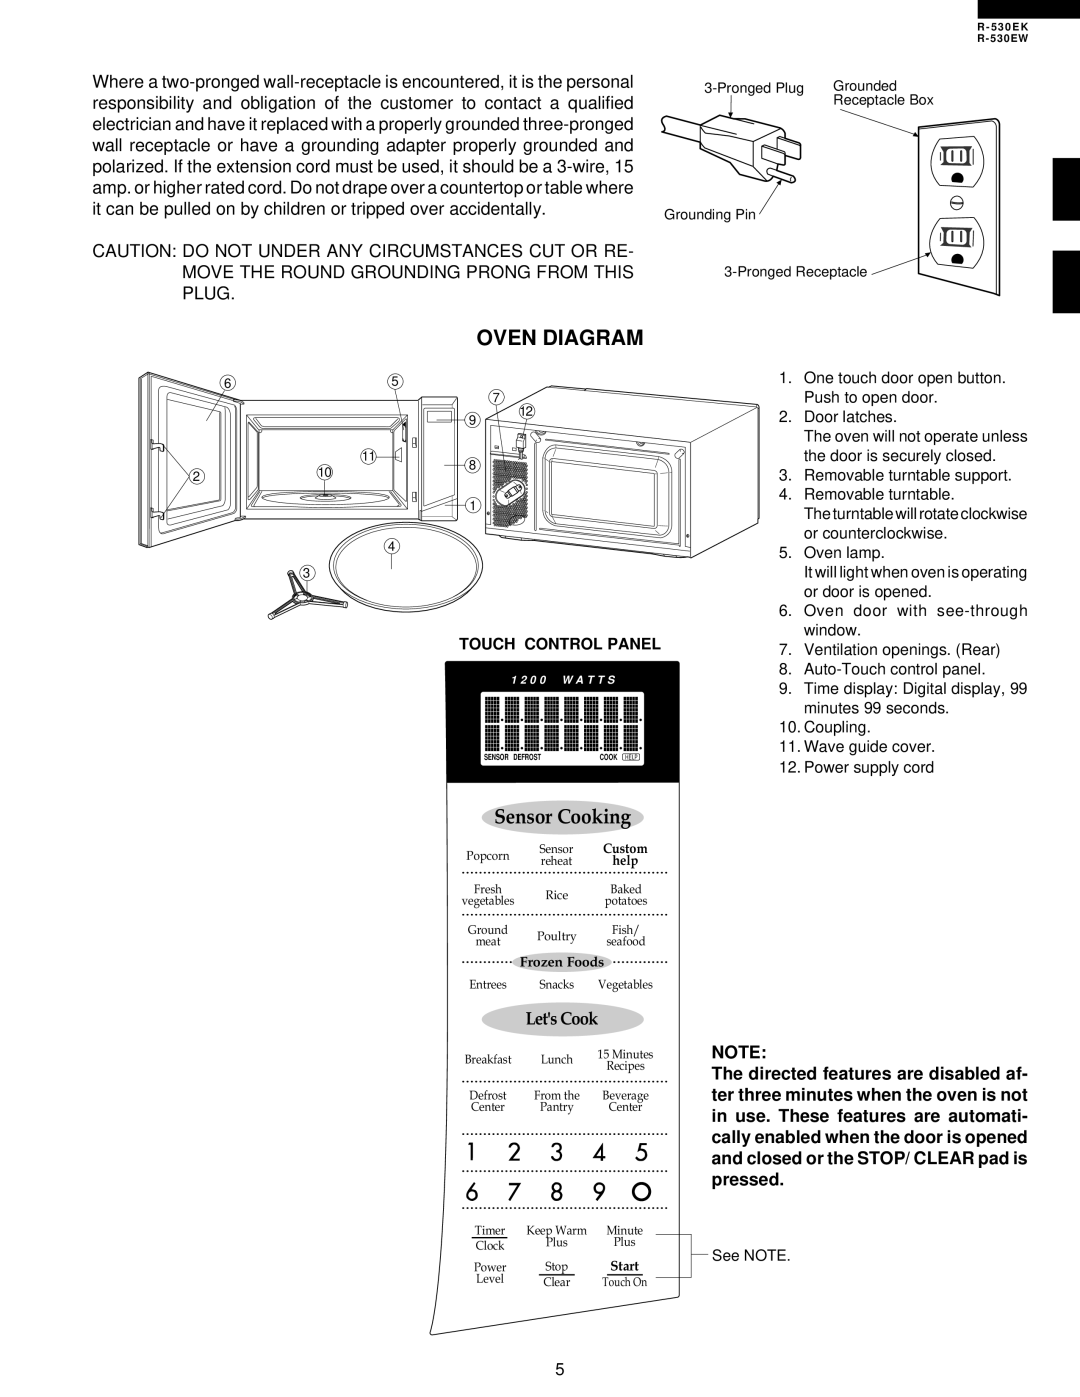 Sharp R-530EK service manual Oven Diagram, Sensor Cooking 